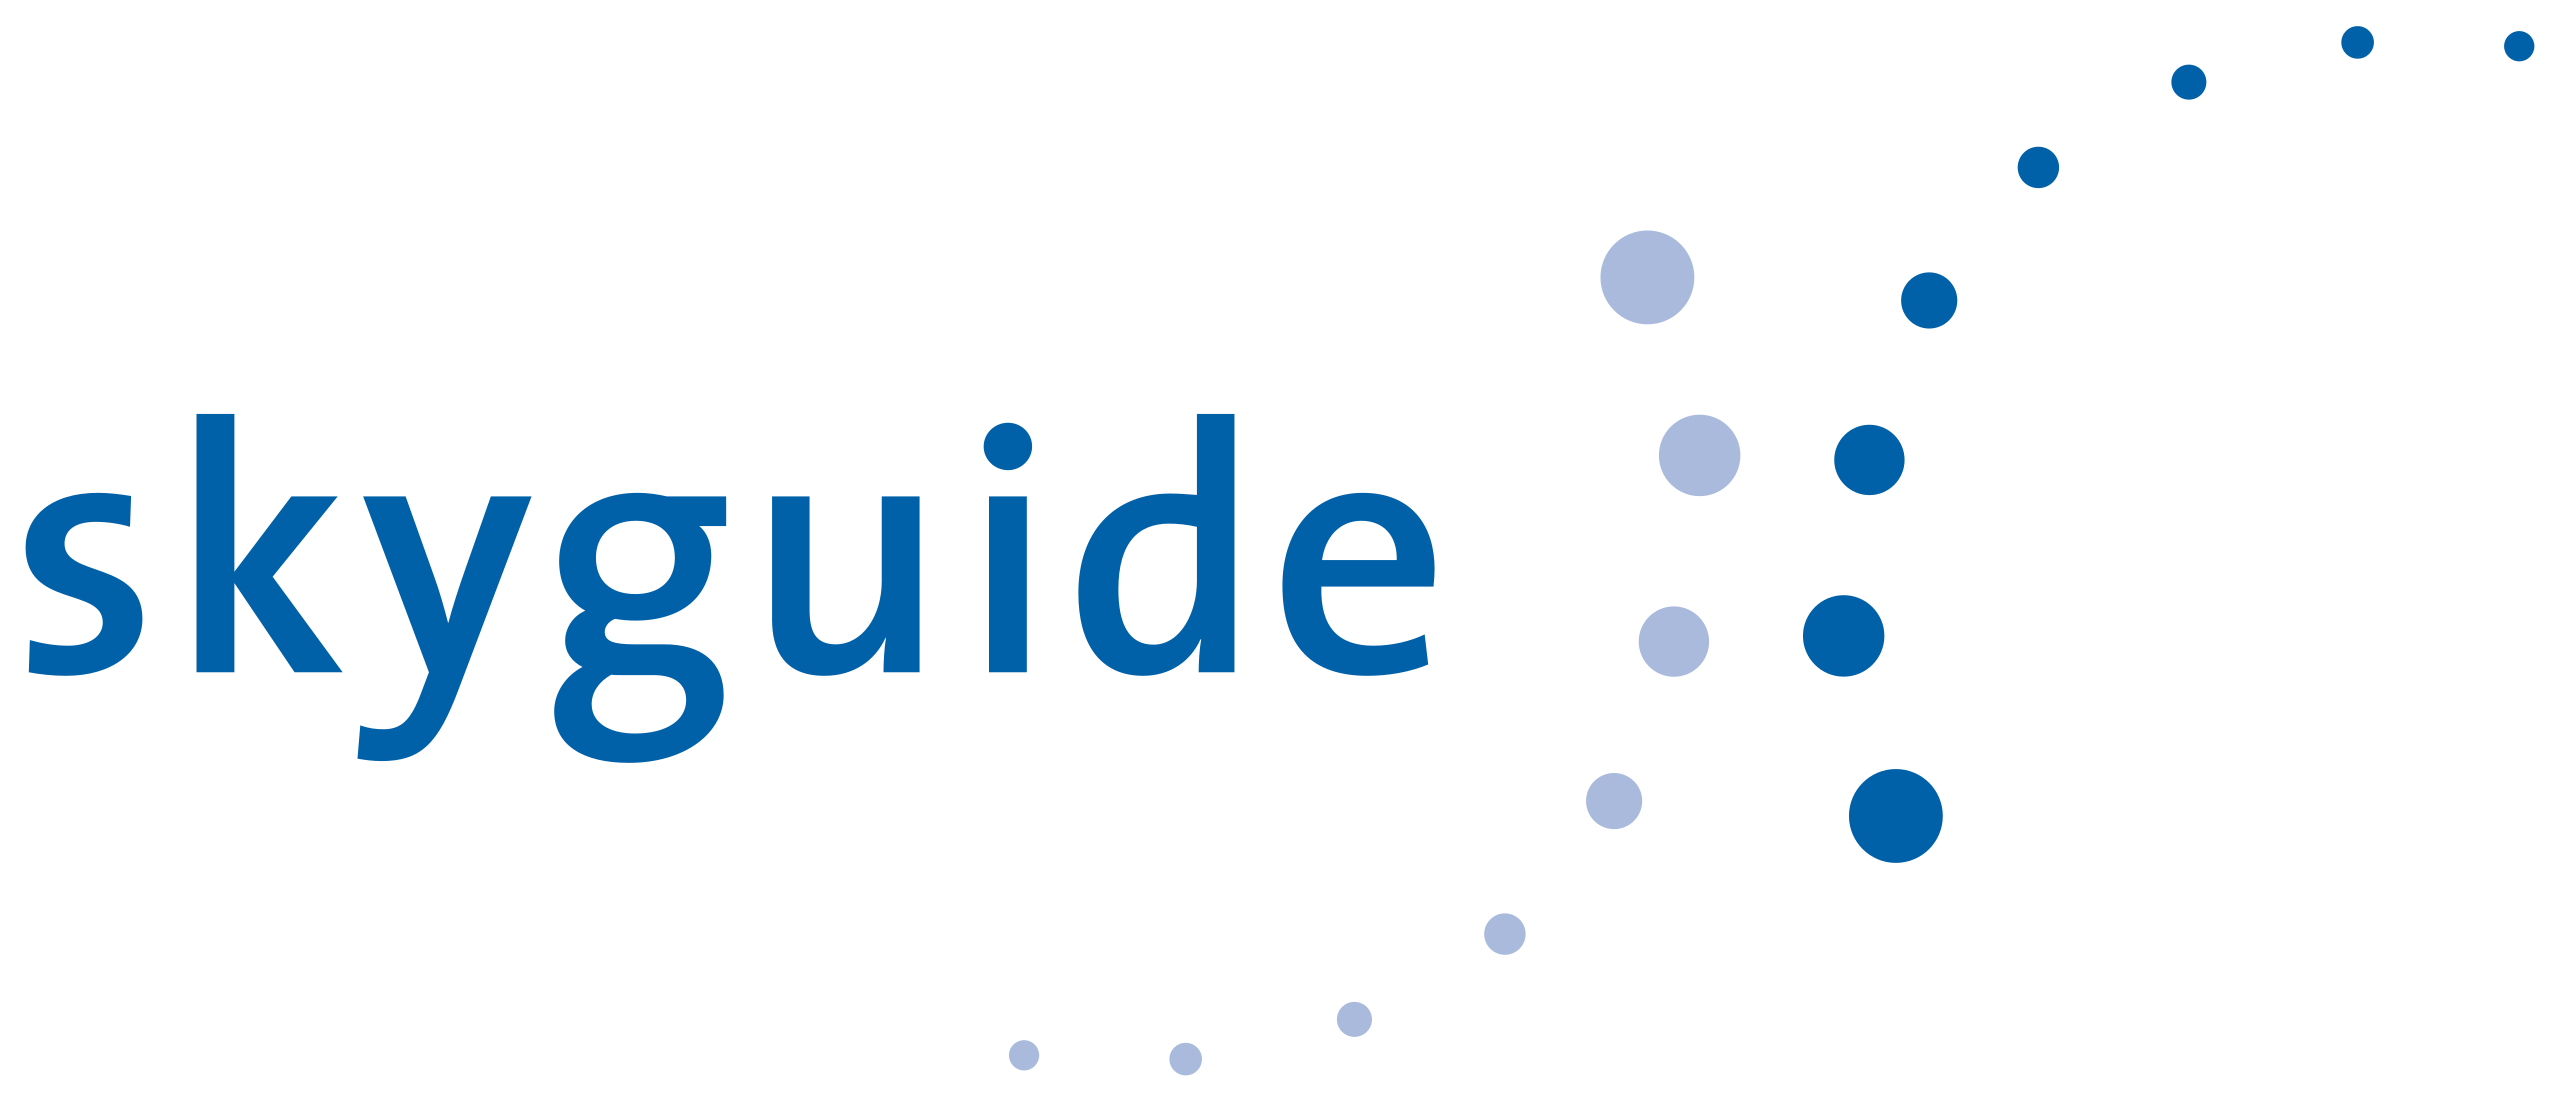 Skyguide-logo.svg